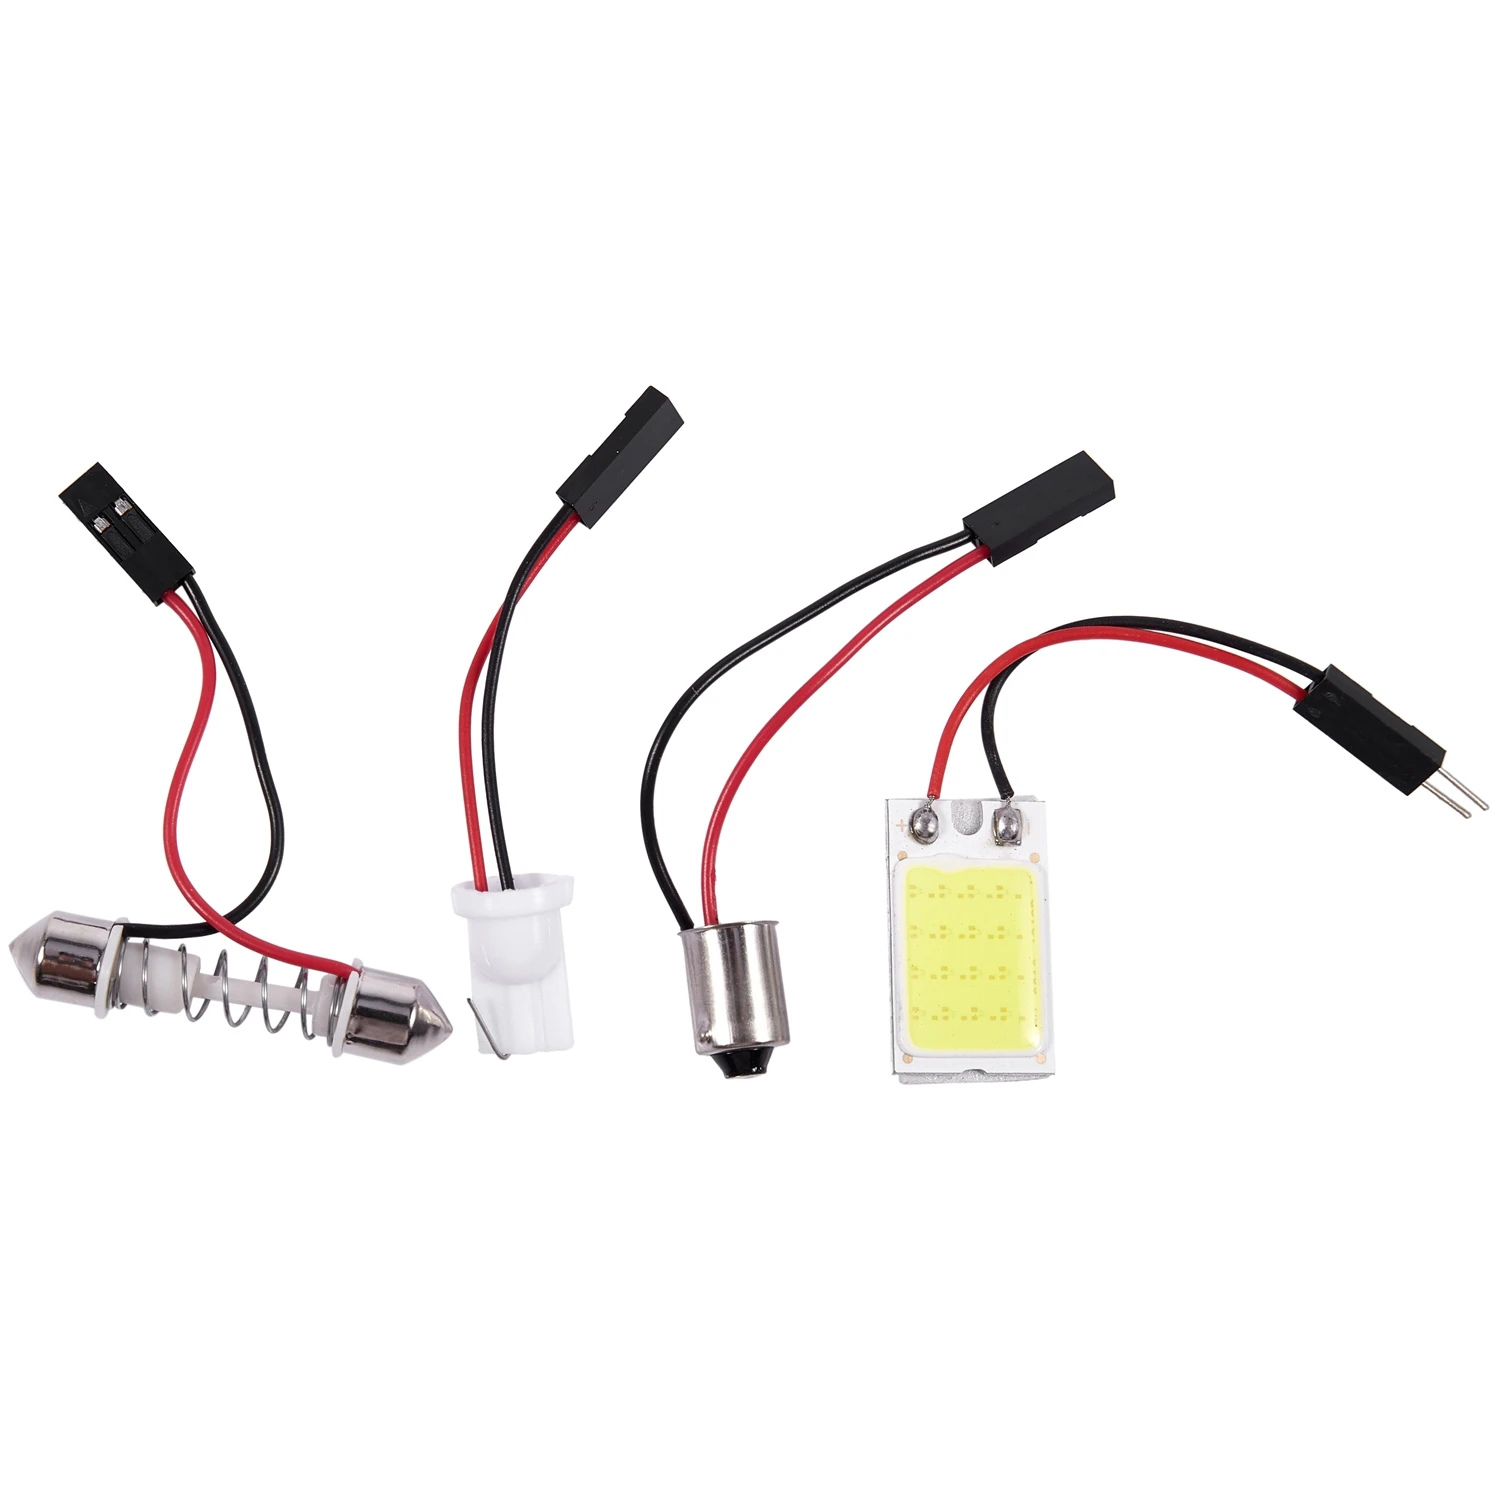 

Auto Super Bright White 18 COB LED Light Bulb Panel + T10 Festoon Adapters